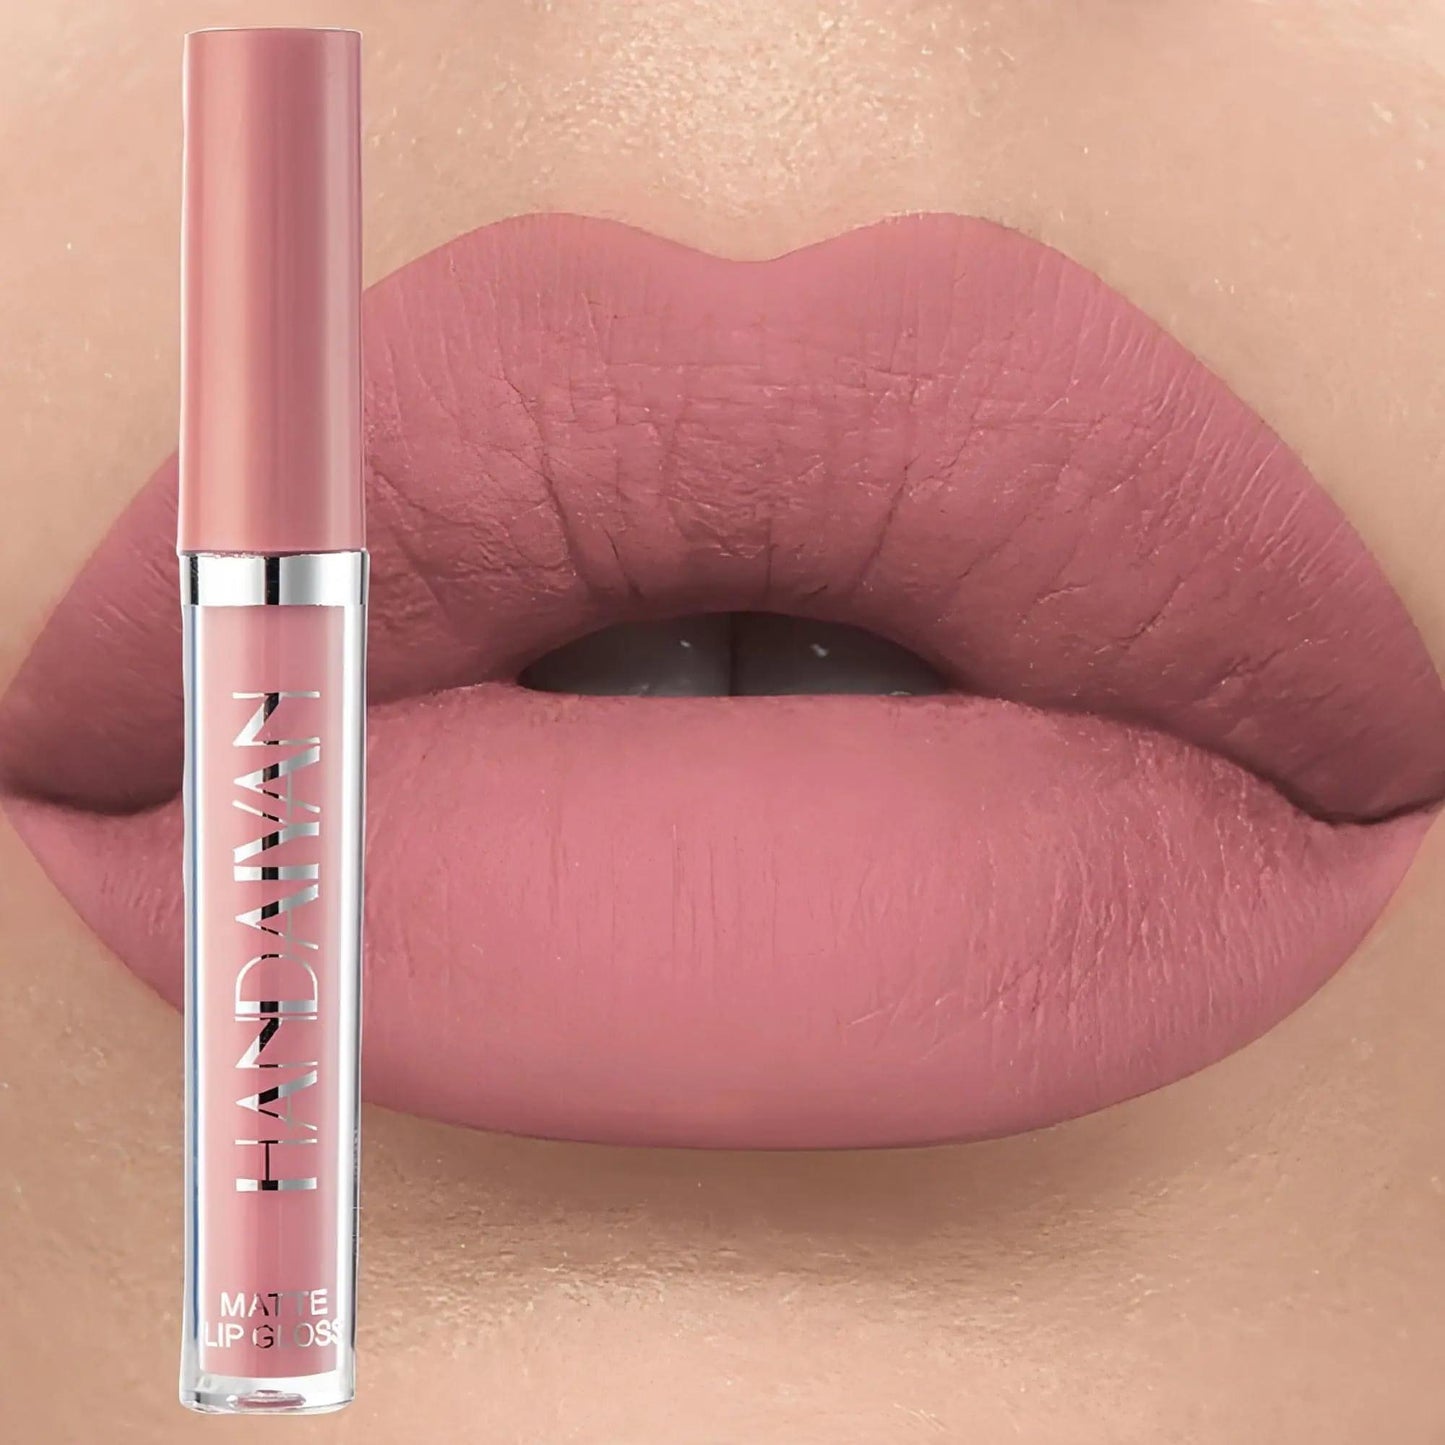 HANDAIYAN 6 Color Matte Liquid lip gloss TheHoom